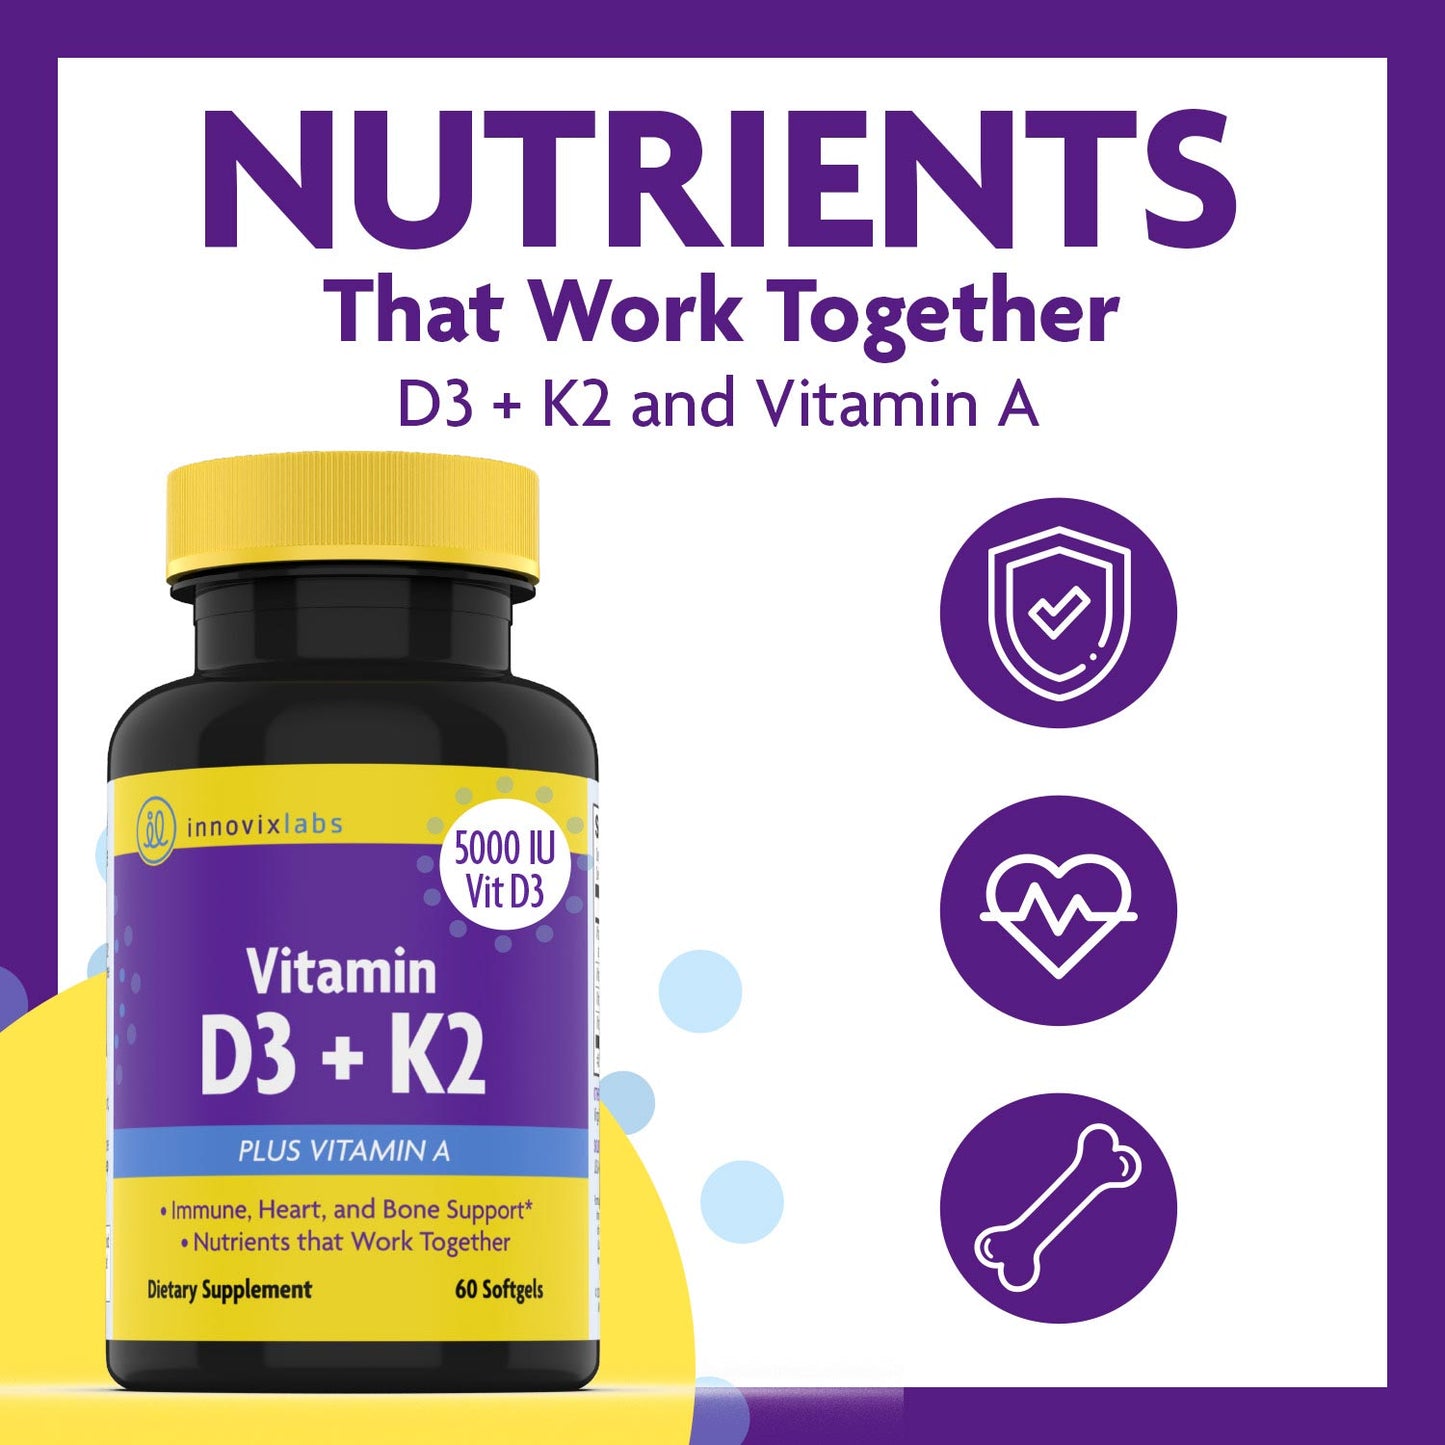 InnovixLabs Vitamin D3 + K2 (with Vitamin A)